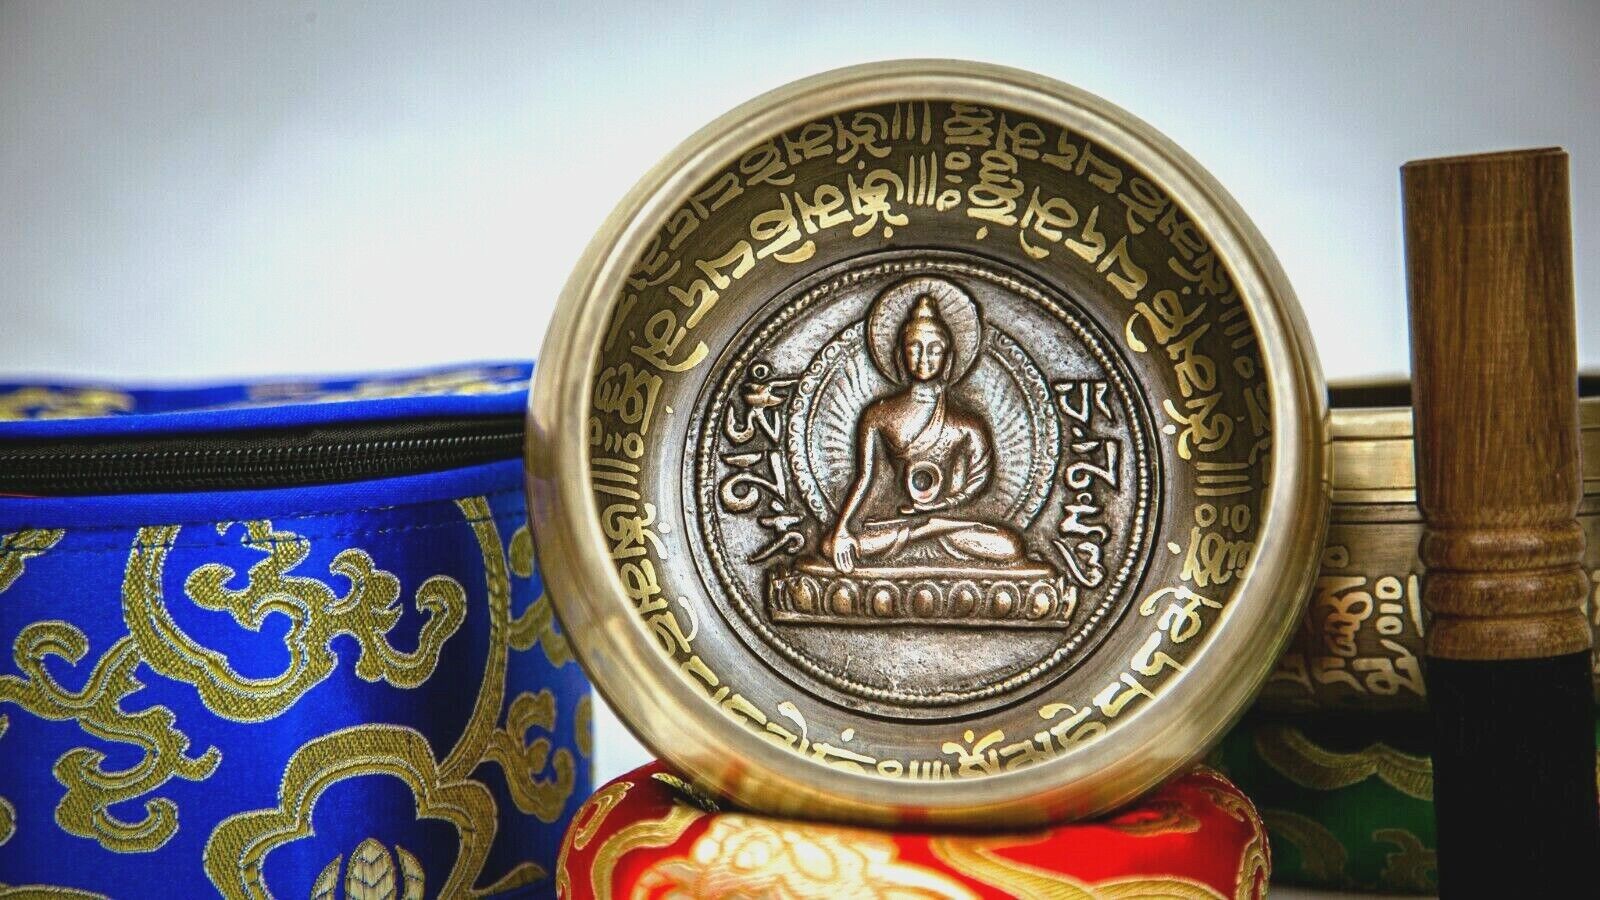 New Antique Buddha 4.5 inches Singing bowl for Meditation, Yoga and chakra